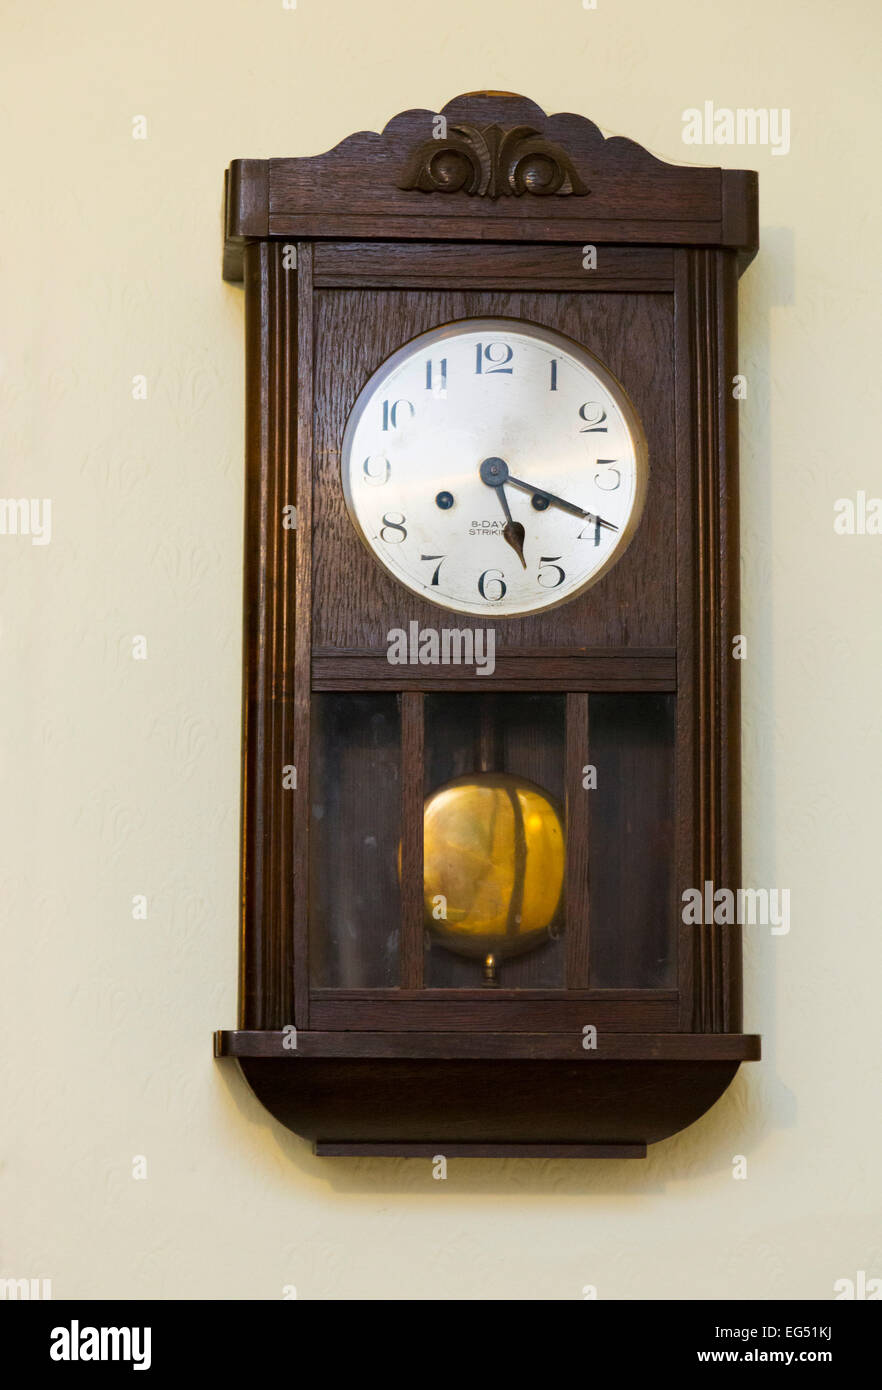 antique-wall-mounted-pendulum-clock-EG51KJ.jpg